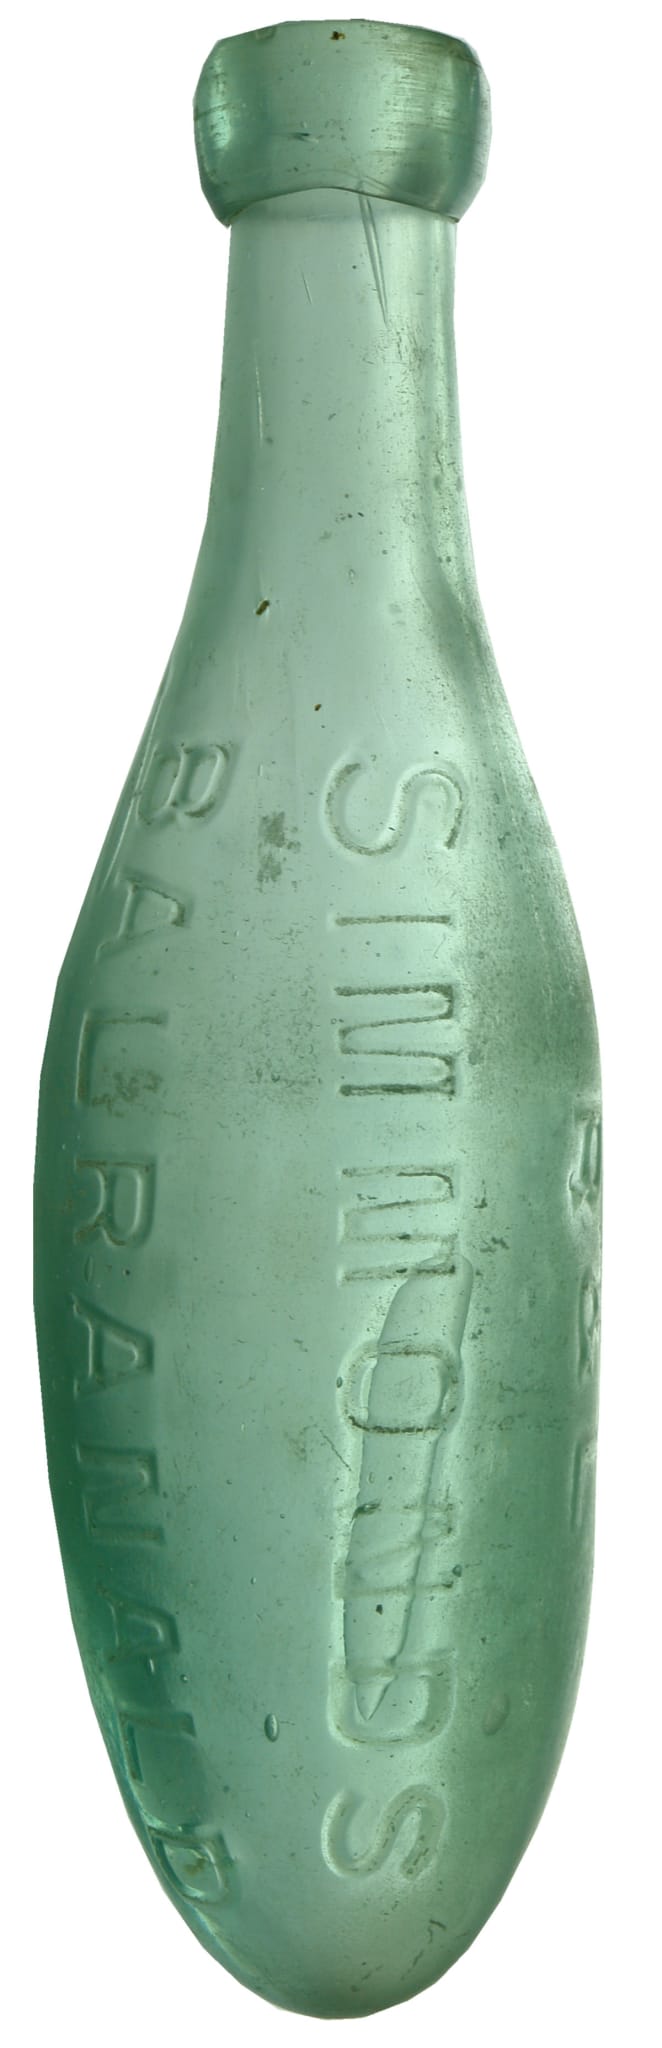 Simmonds Balranald Antique Torpedo Bottle